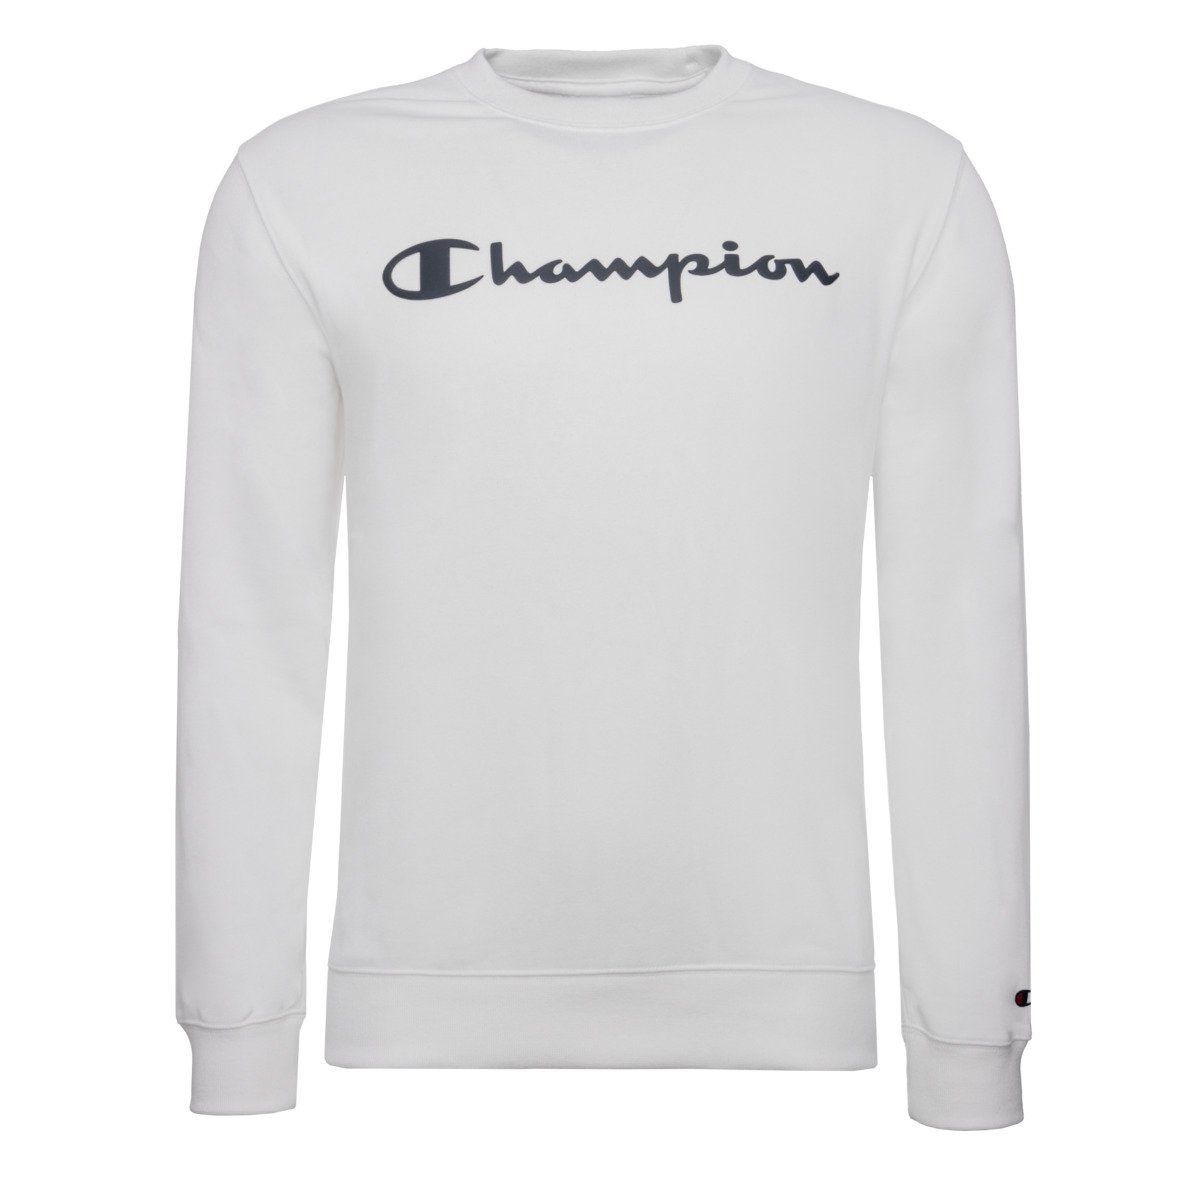 weiss Herren Crewneck Champion Sweatshirt